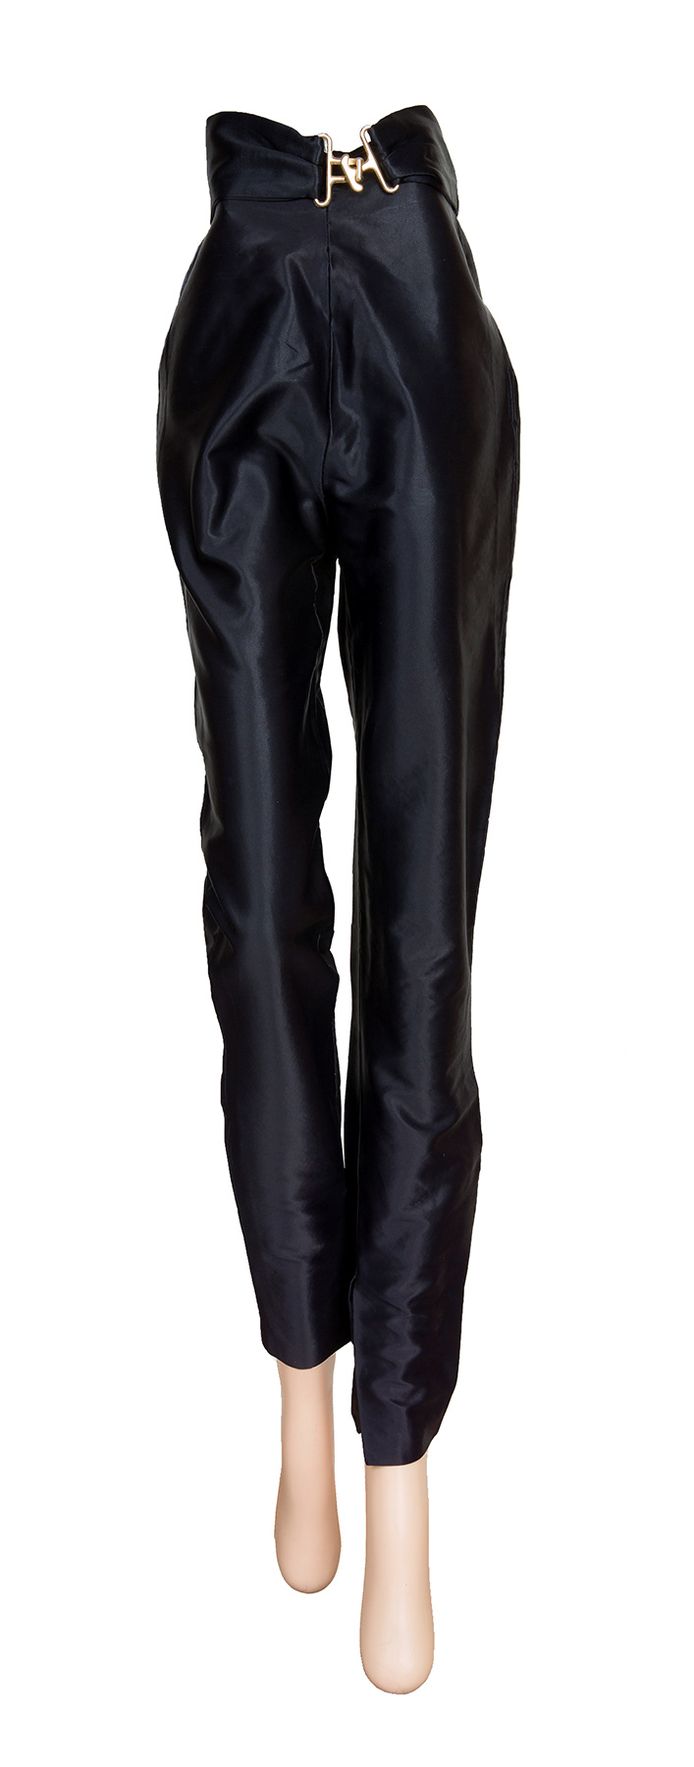 De hoge broek die Olivia Newton-John droeg in ‘Grease’ wordt geveild.